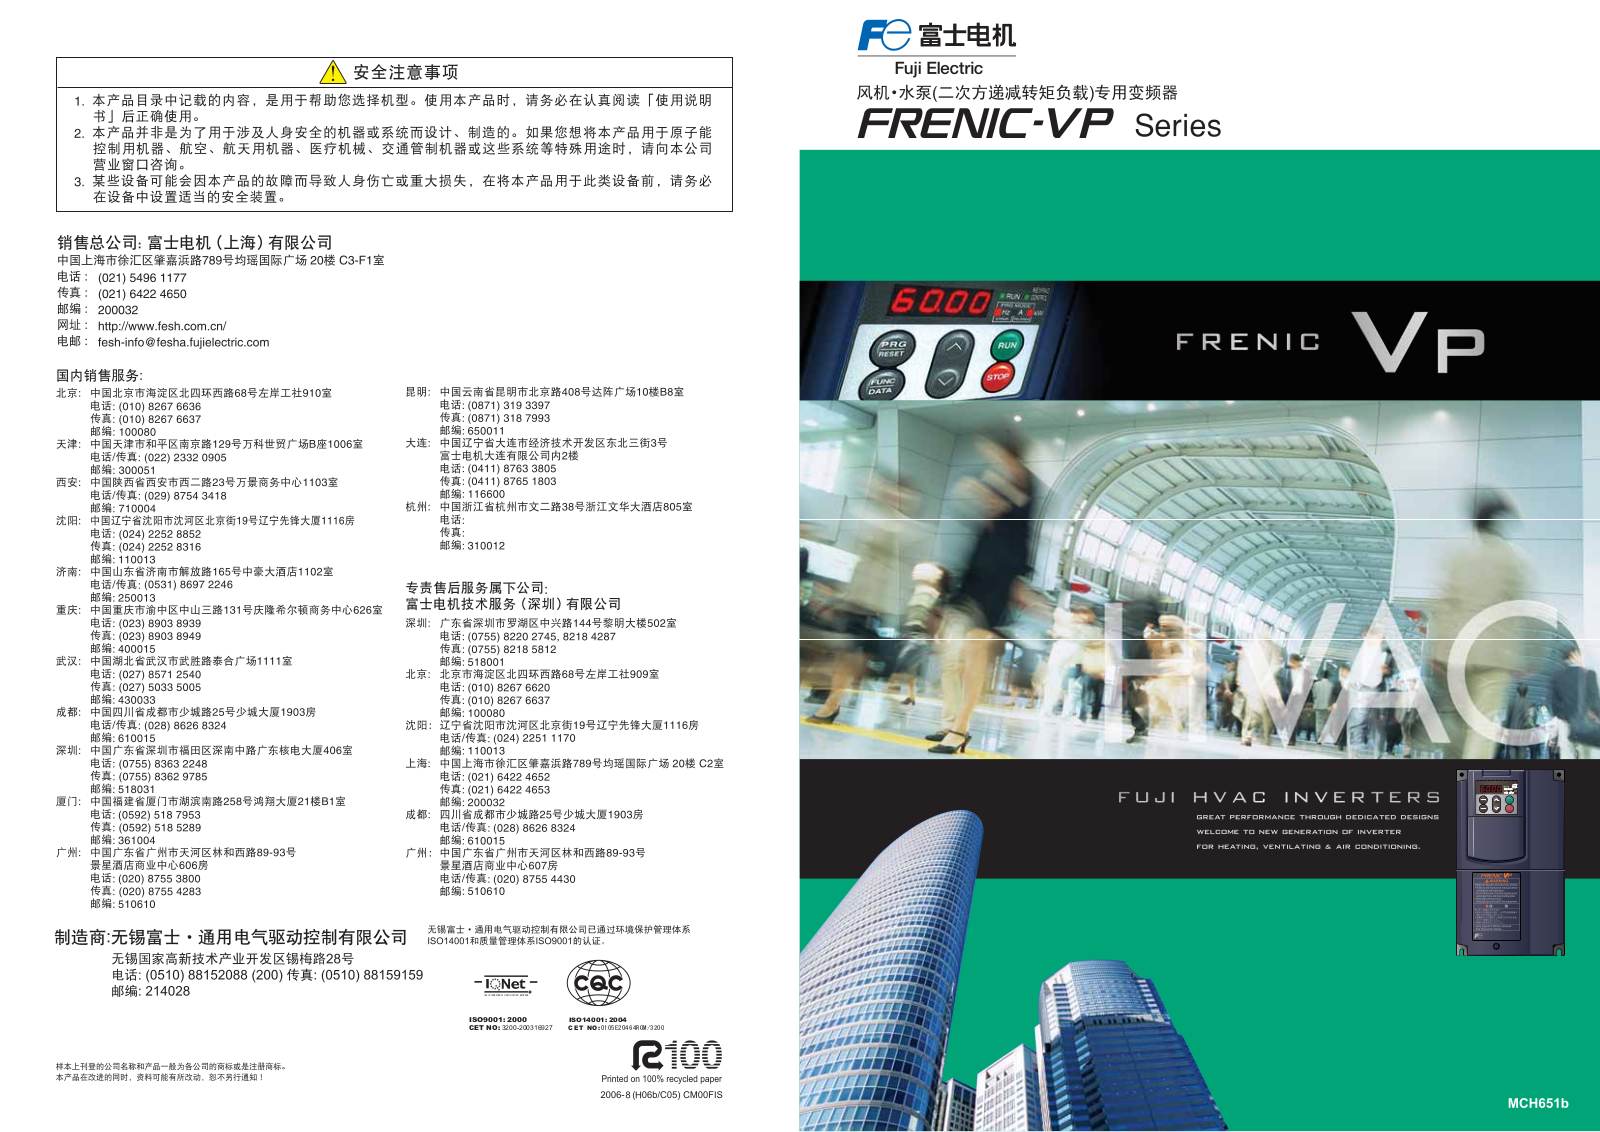 Fuji Electric FRENIC-VP Service Manual